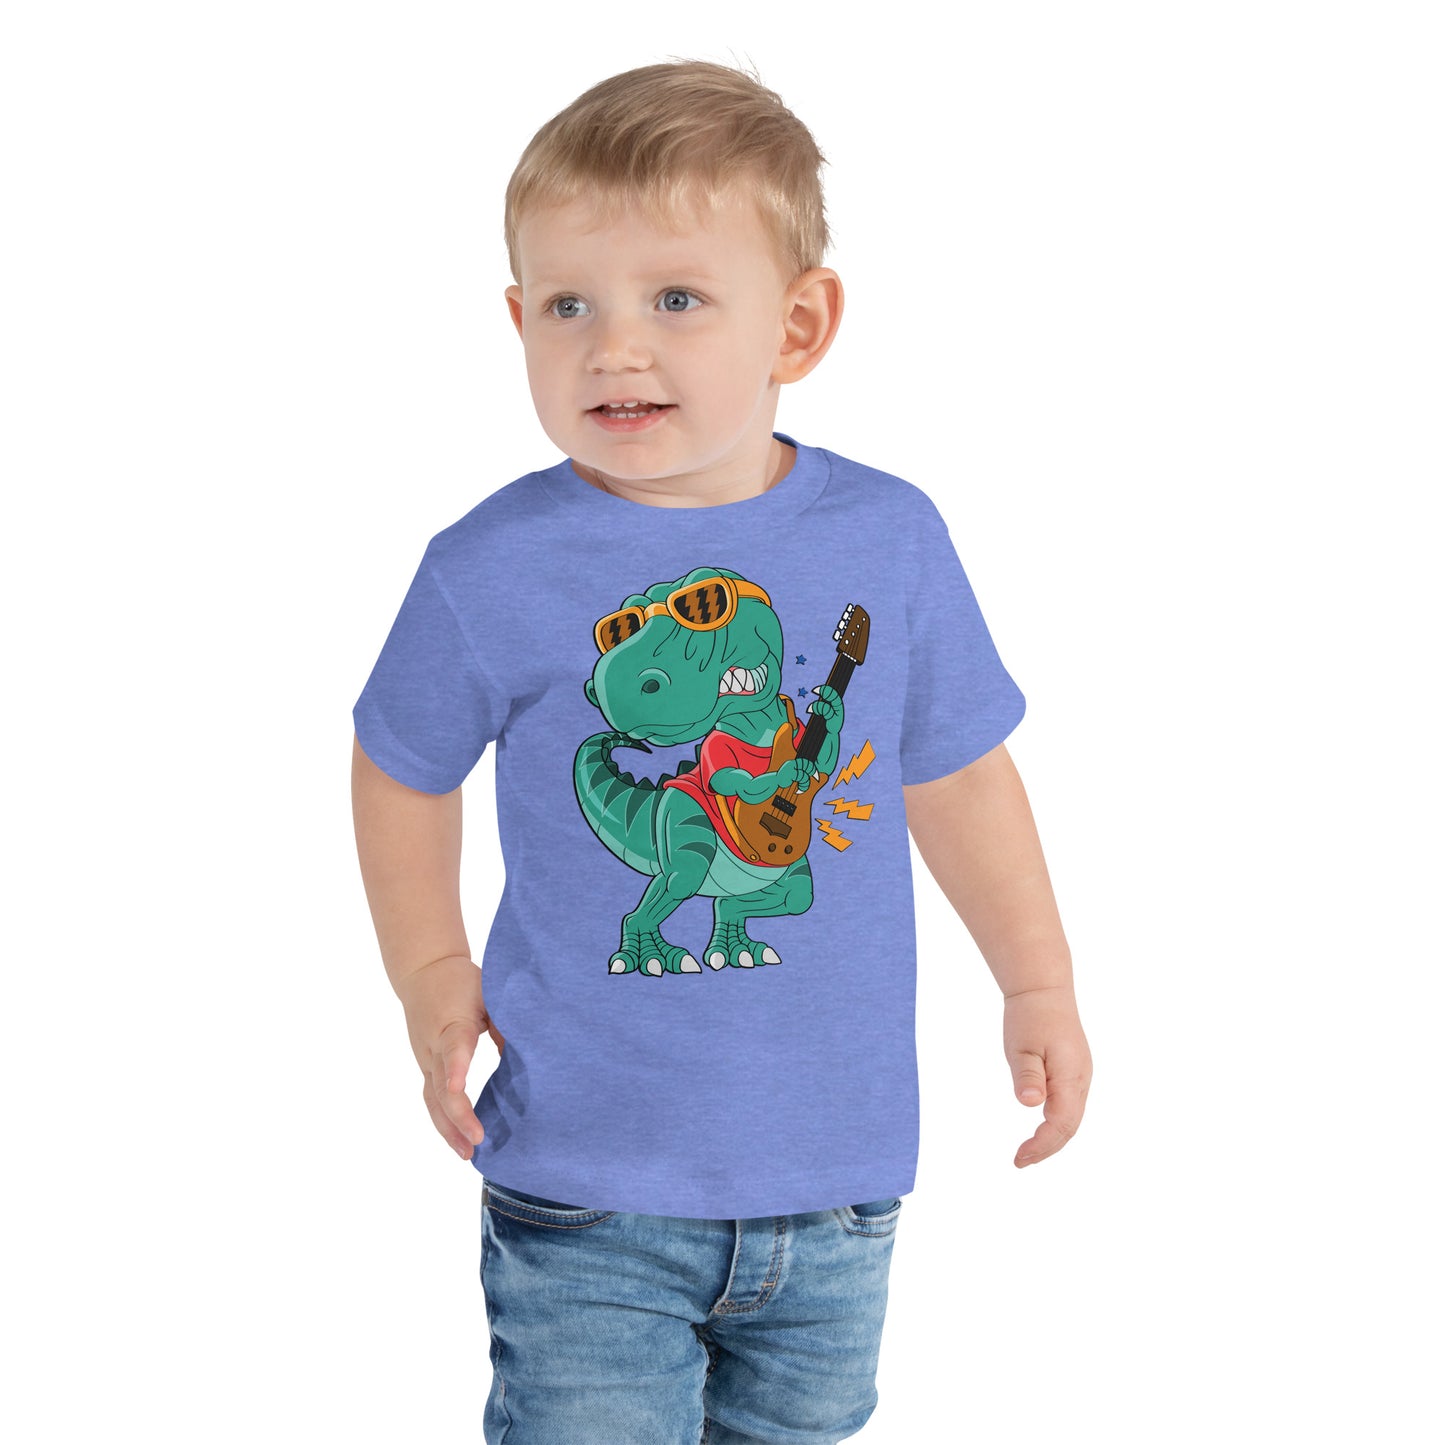 Cool Dinosaur Rock Star T-shirt, No. 0258